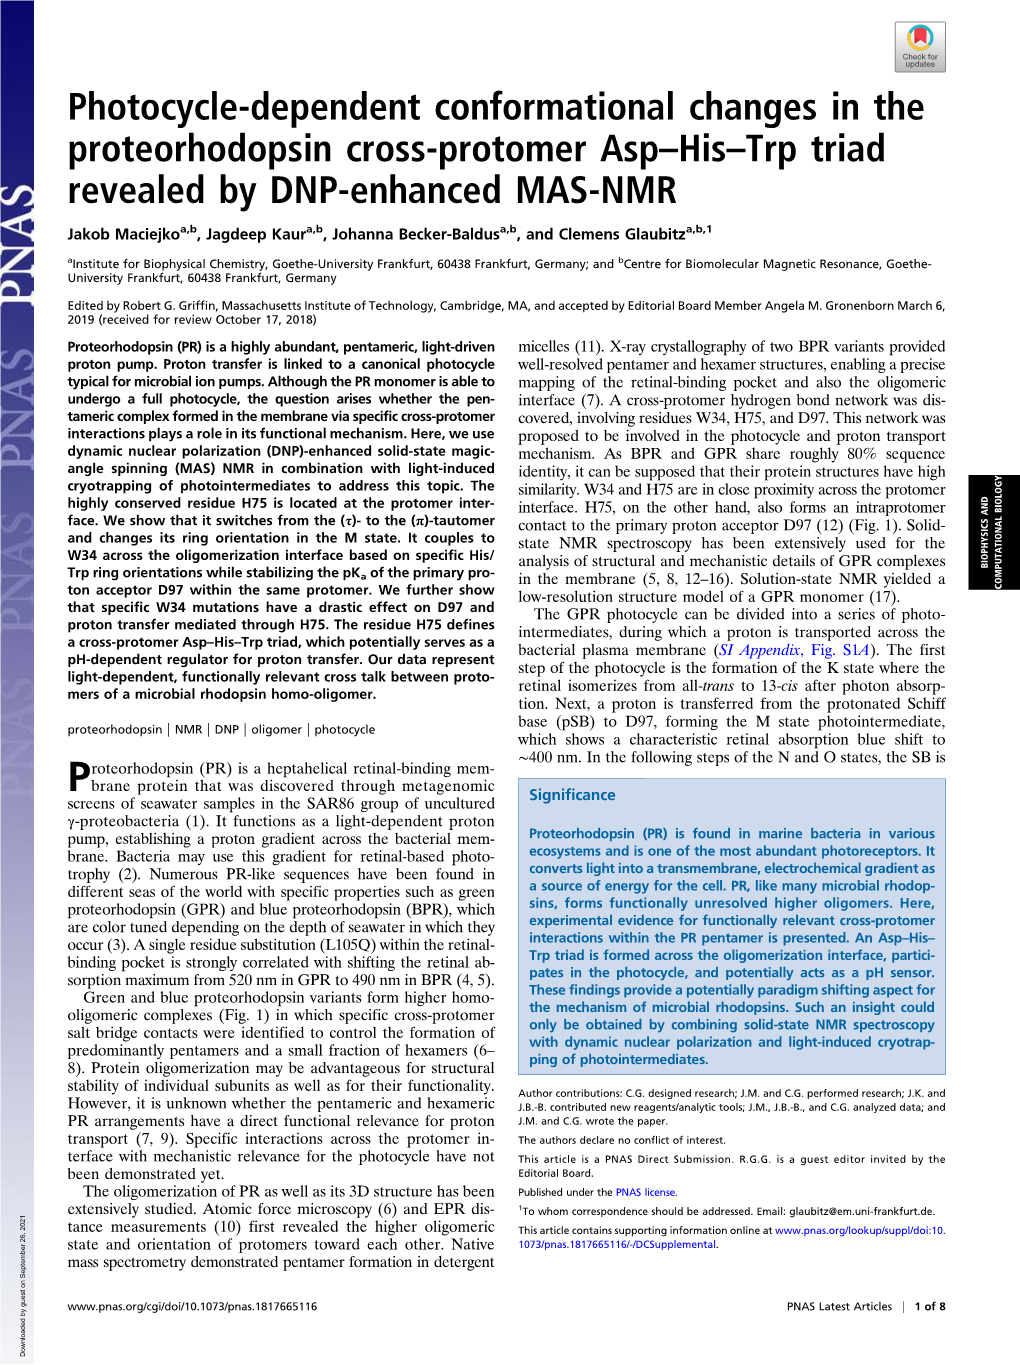 Proteorhodopsin Cross-Protomer Asp–His–Trp Triad Revealed by DNP-Enhanced MAS-NMR